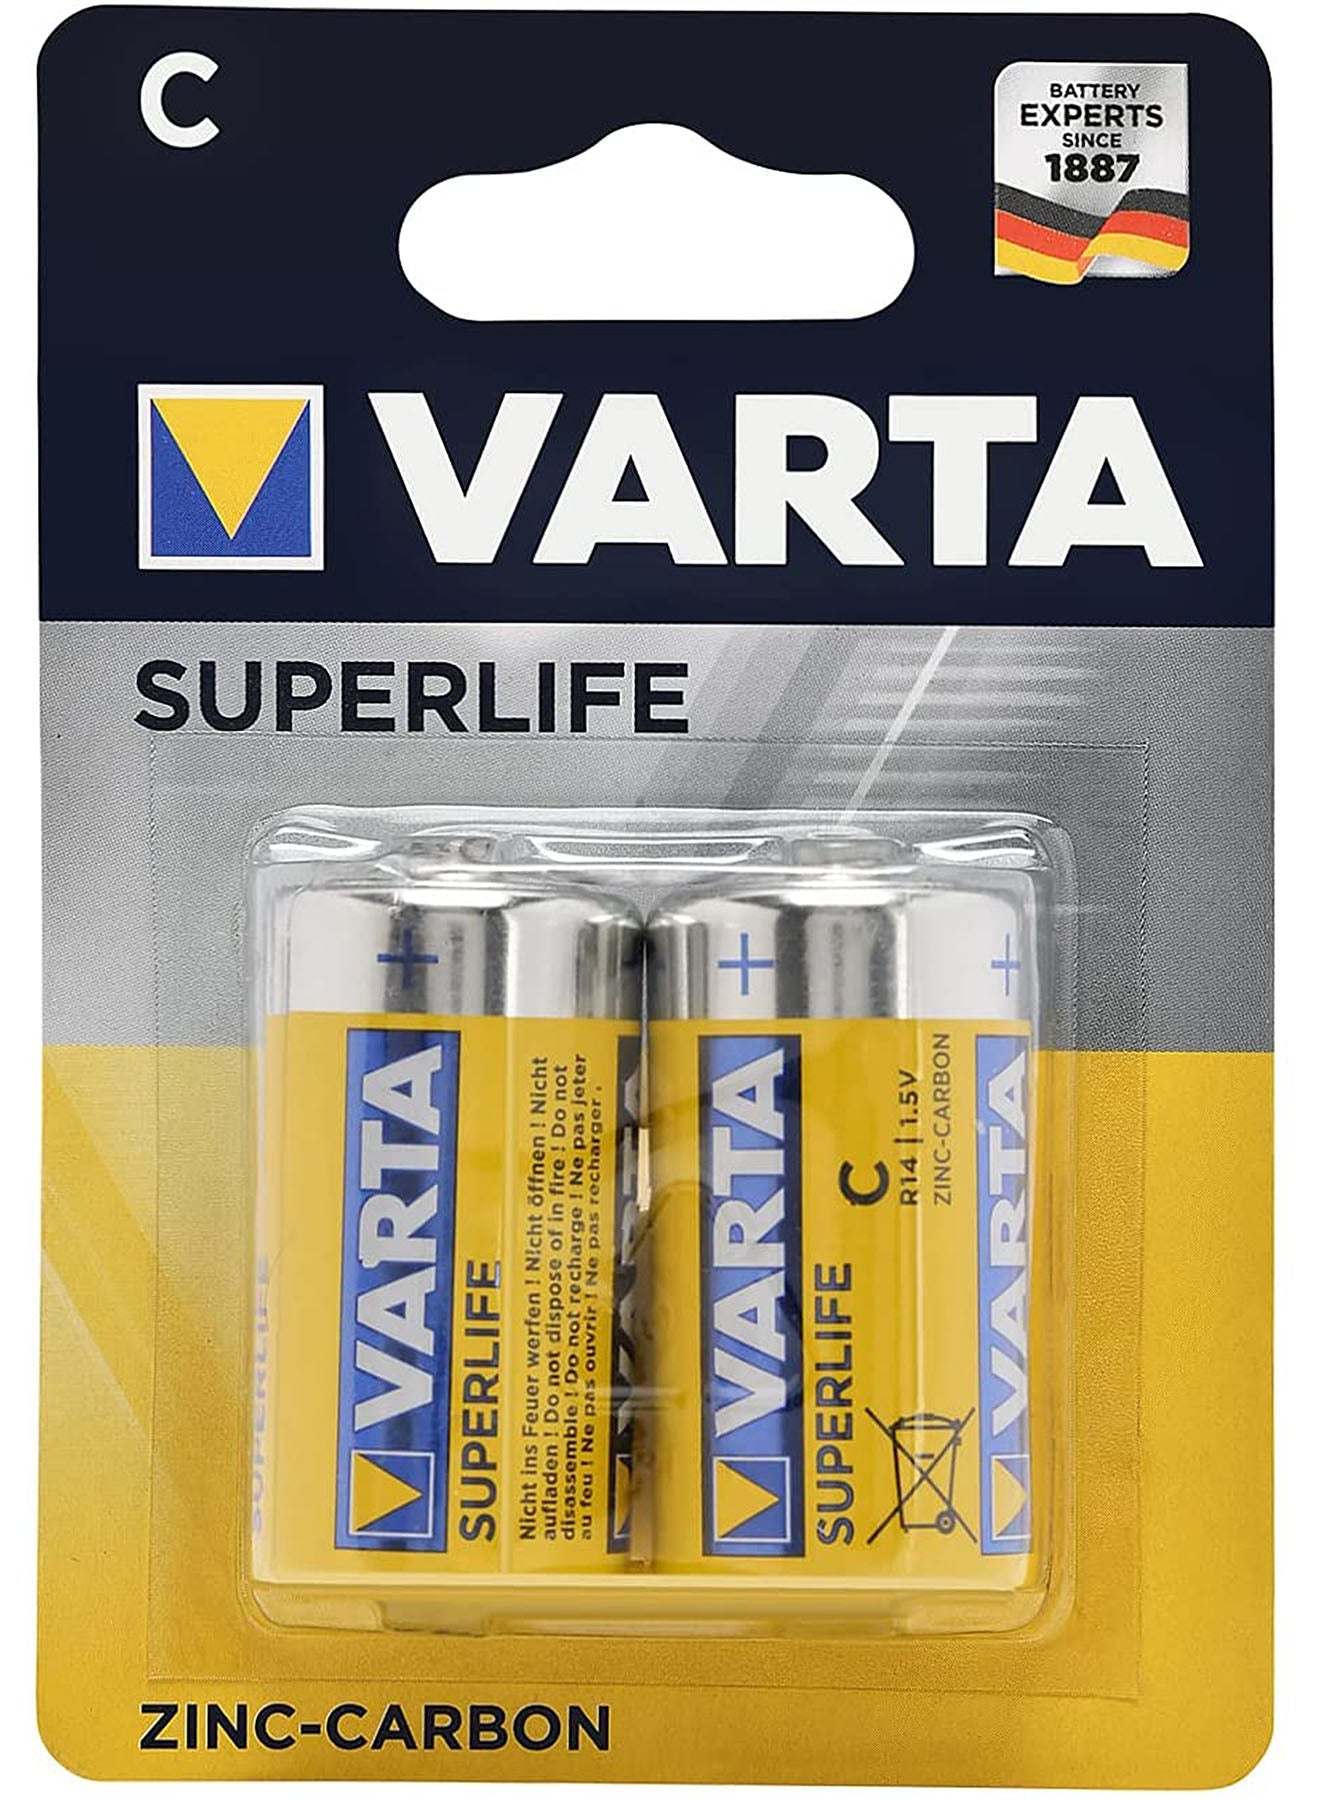 Varta Superlife C Battery 2 Units Value Pack of 4 